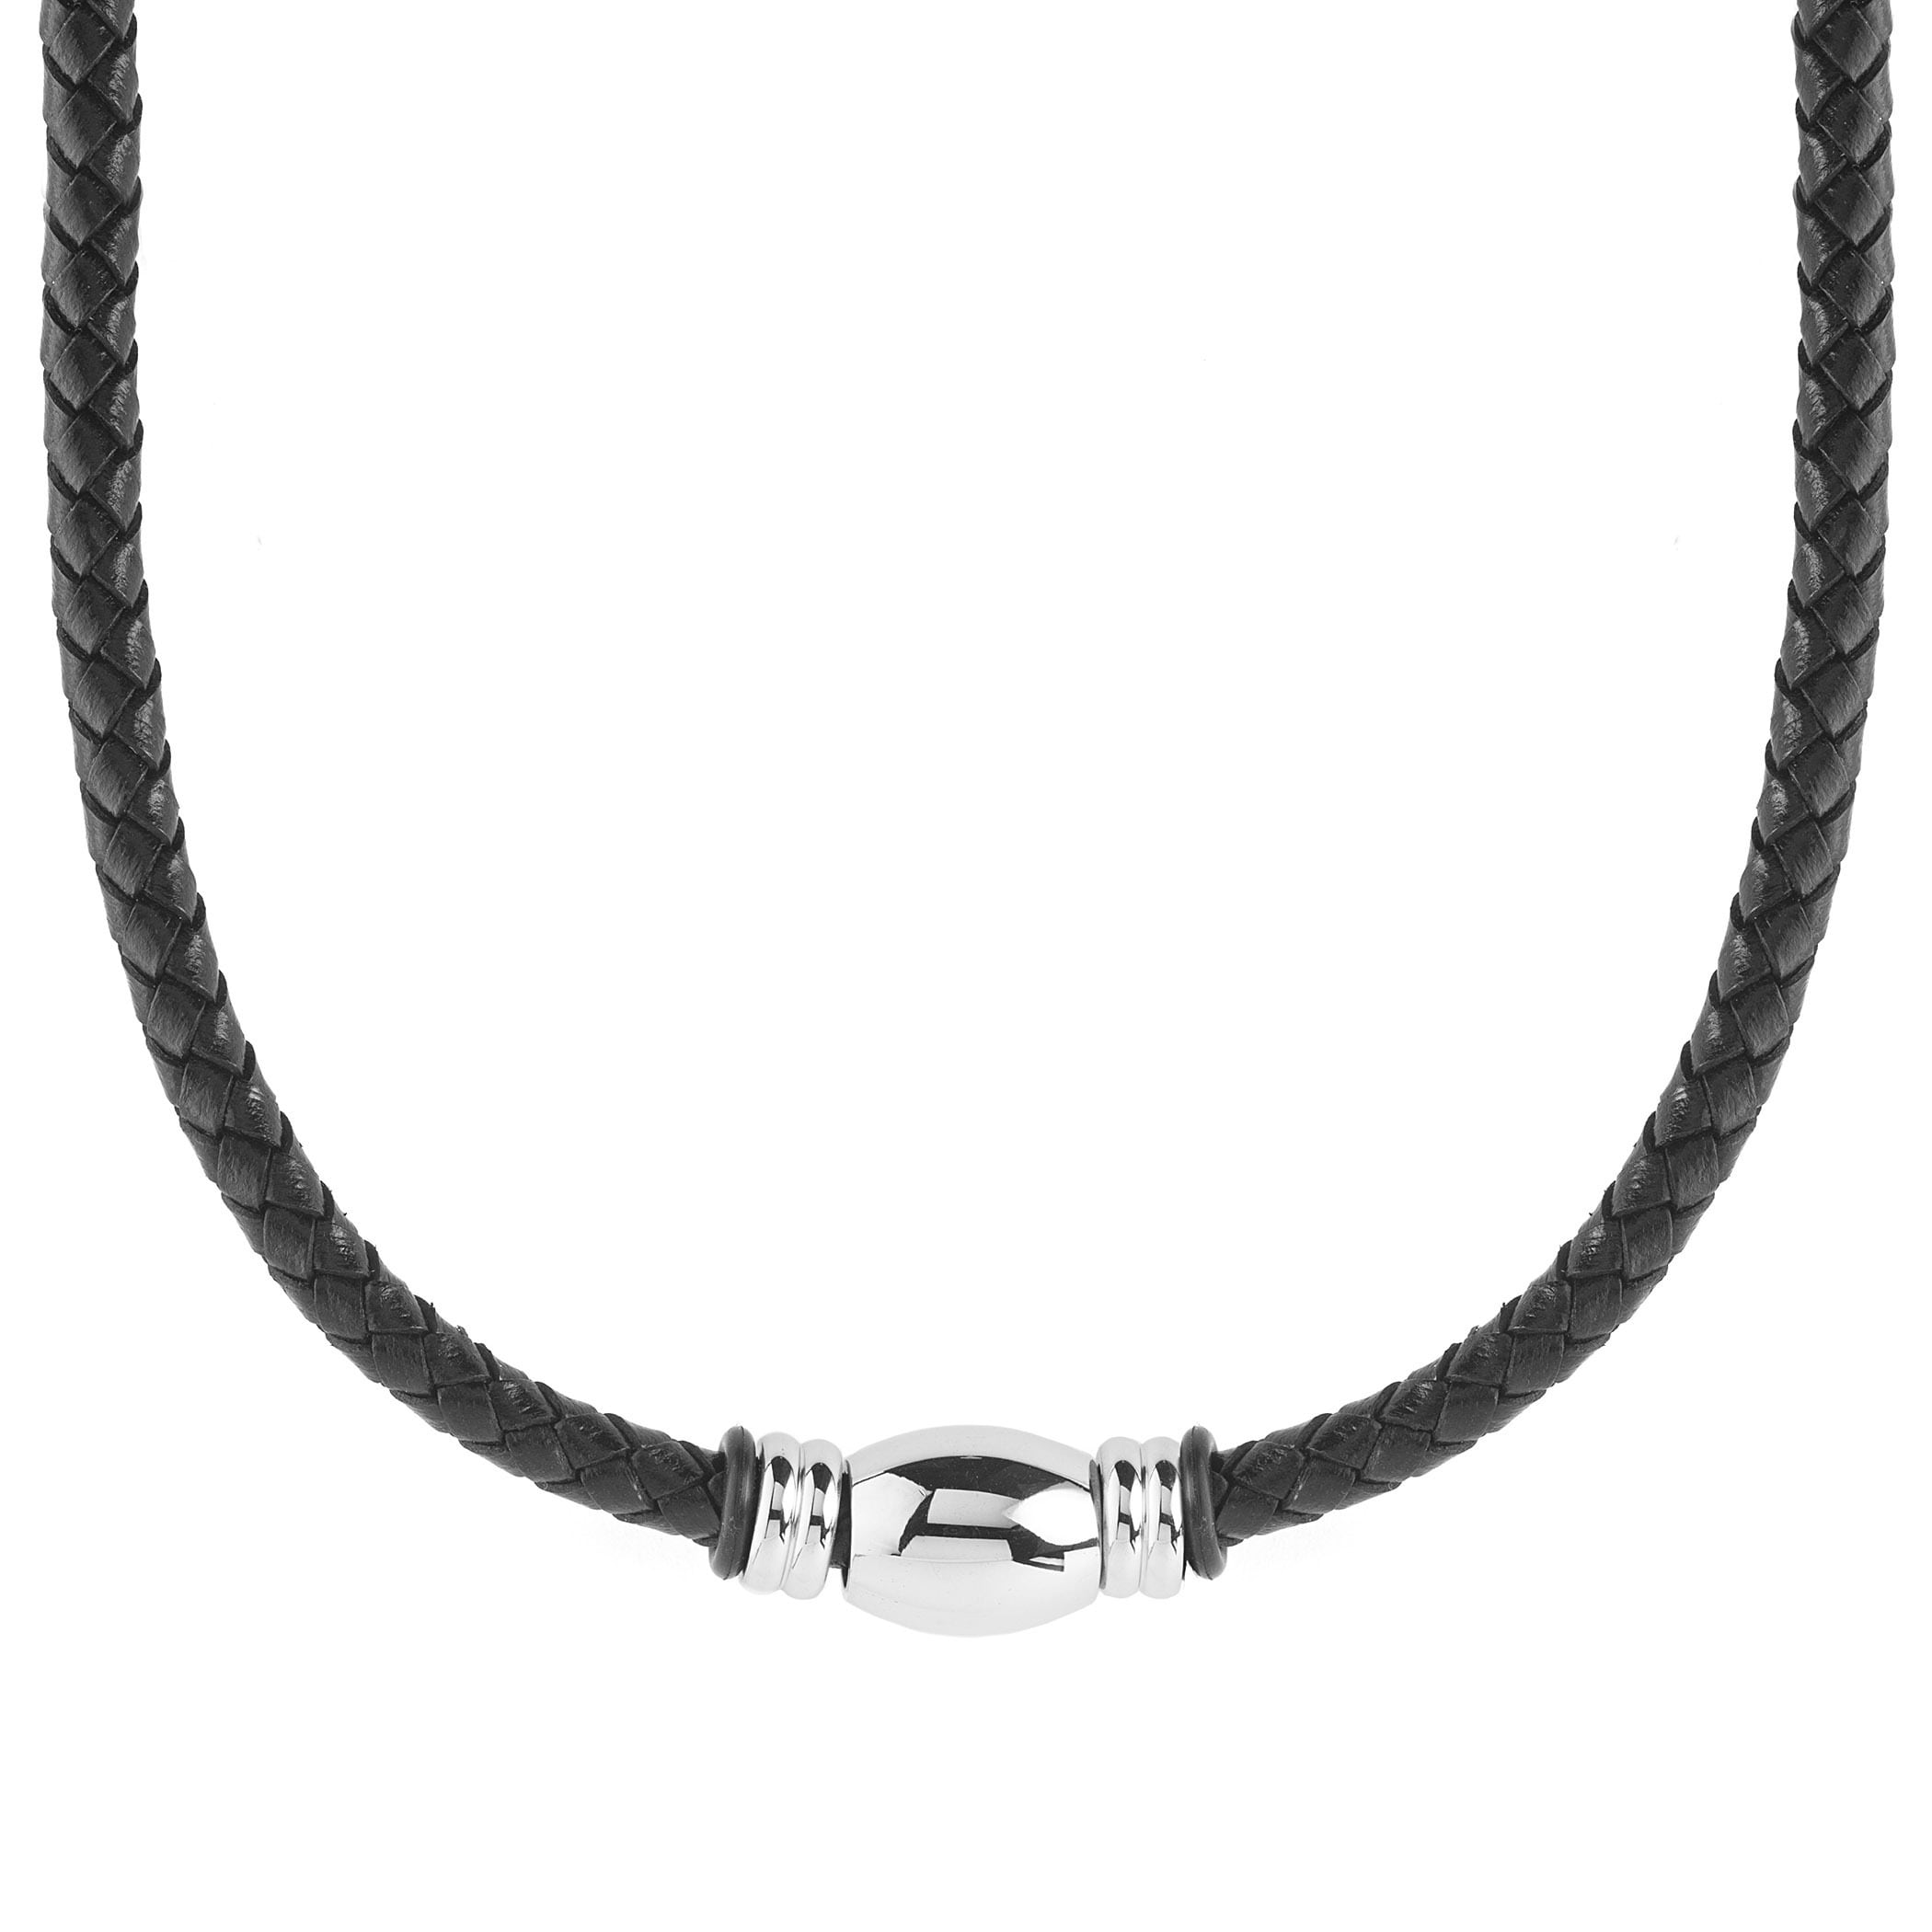 3mm Black/Grey Braided Leather Sterling Silver Necklace Or Bracelet 16" 18" 20"